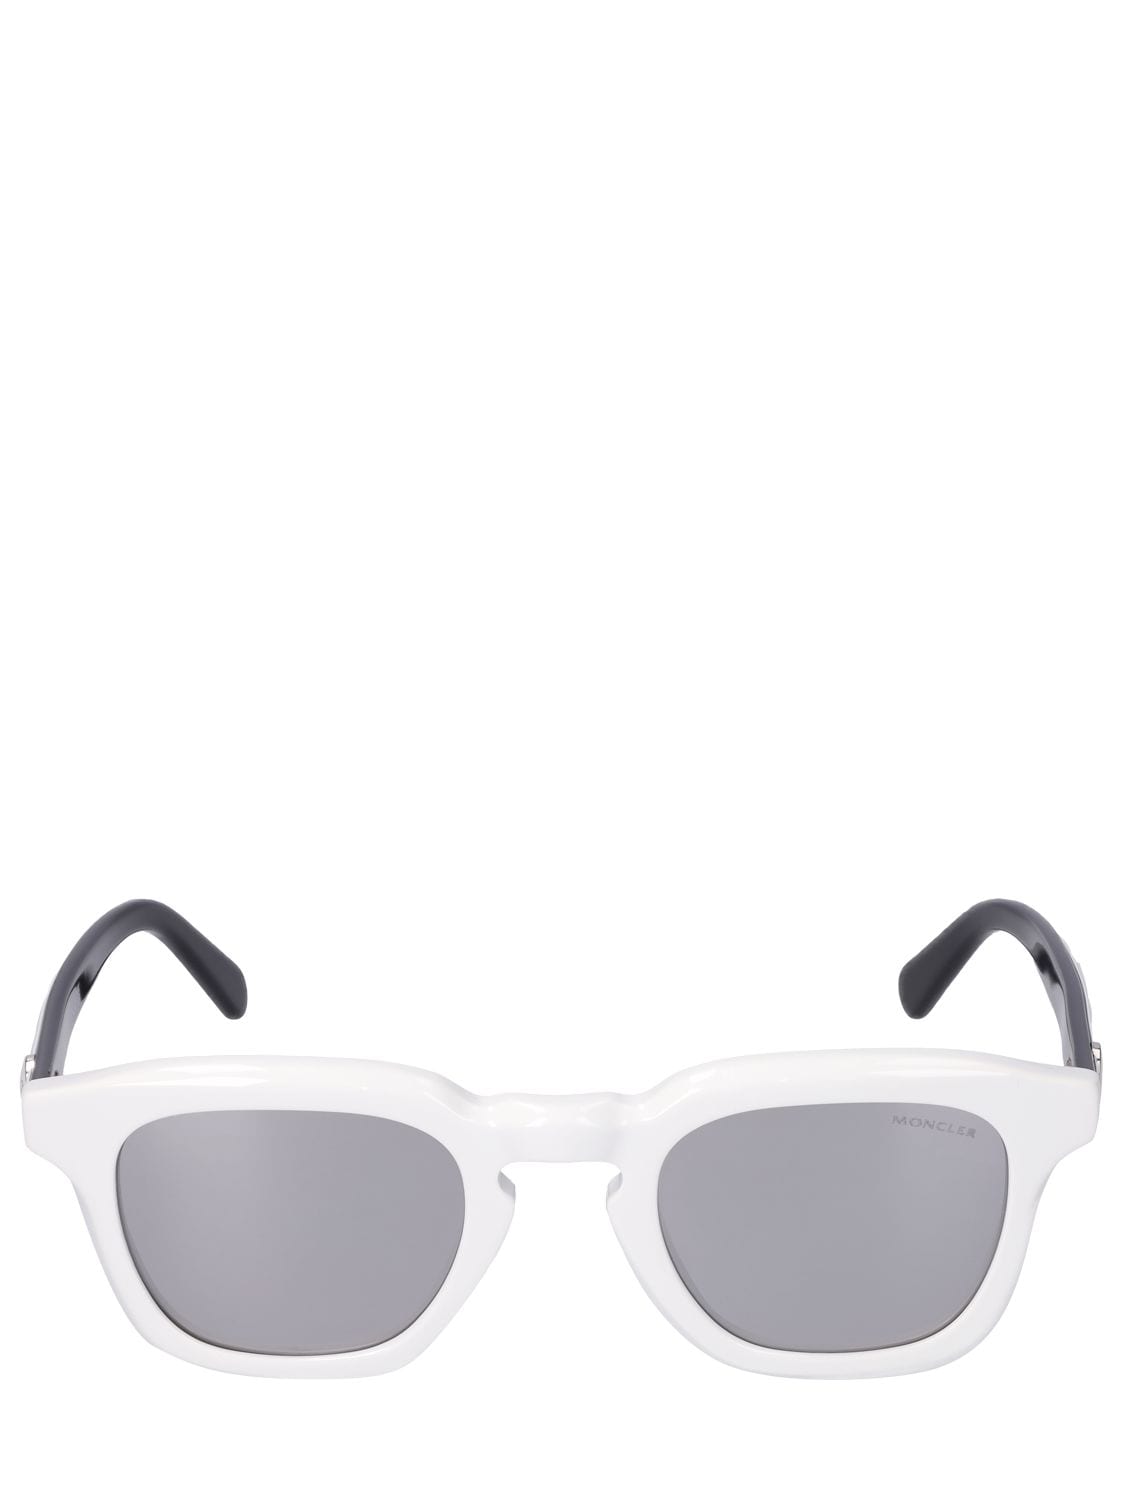 Image of Gradd Sunglasses